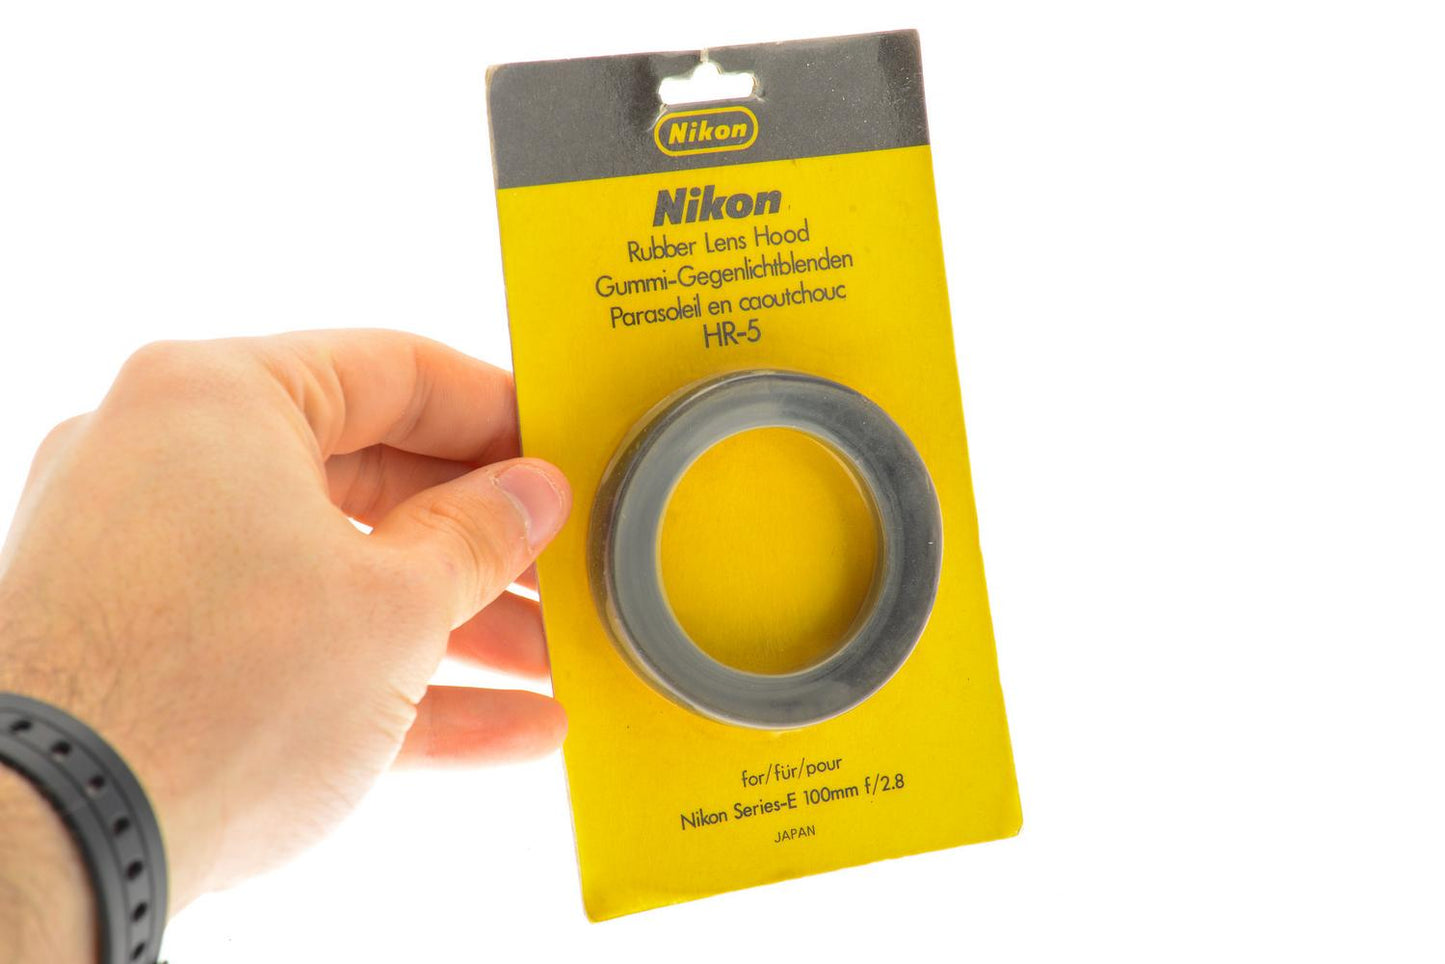 Nikon HR-5 Lens Hood - Accessory